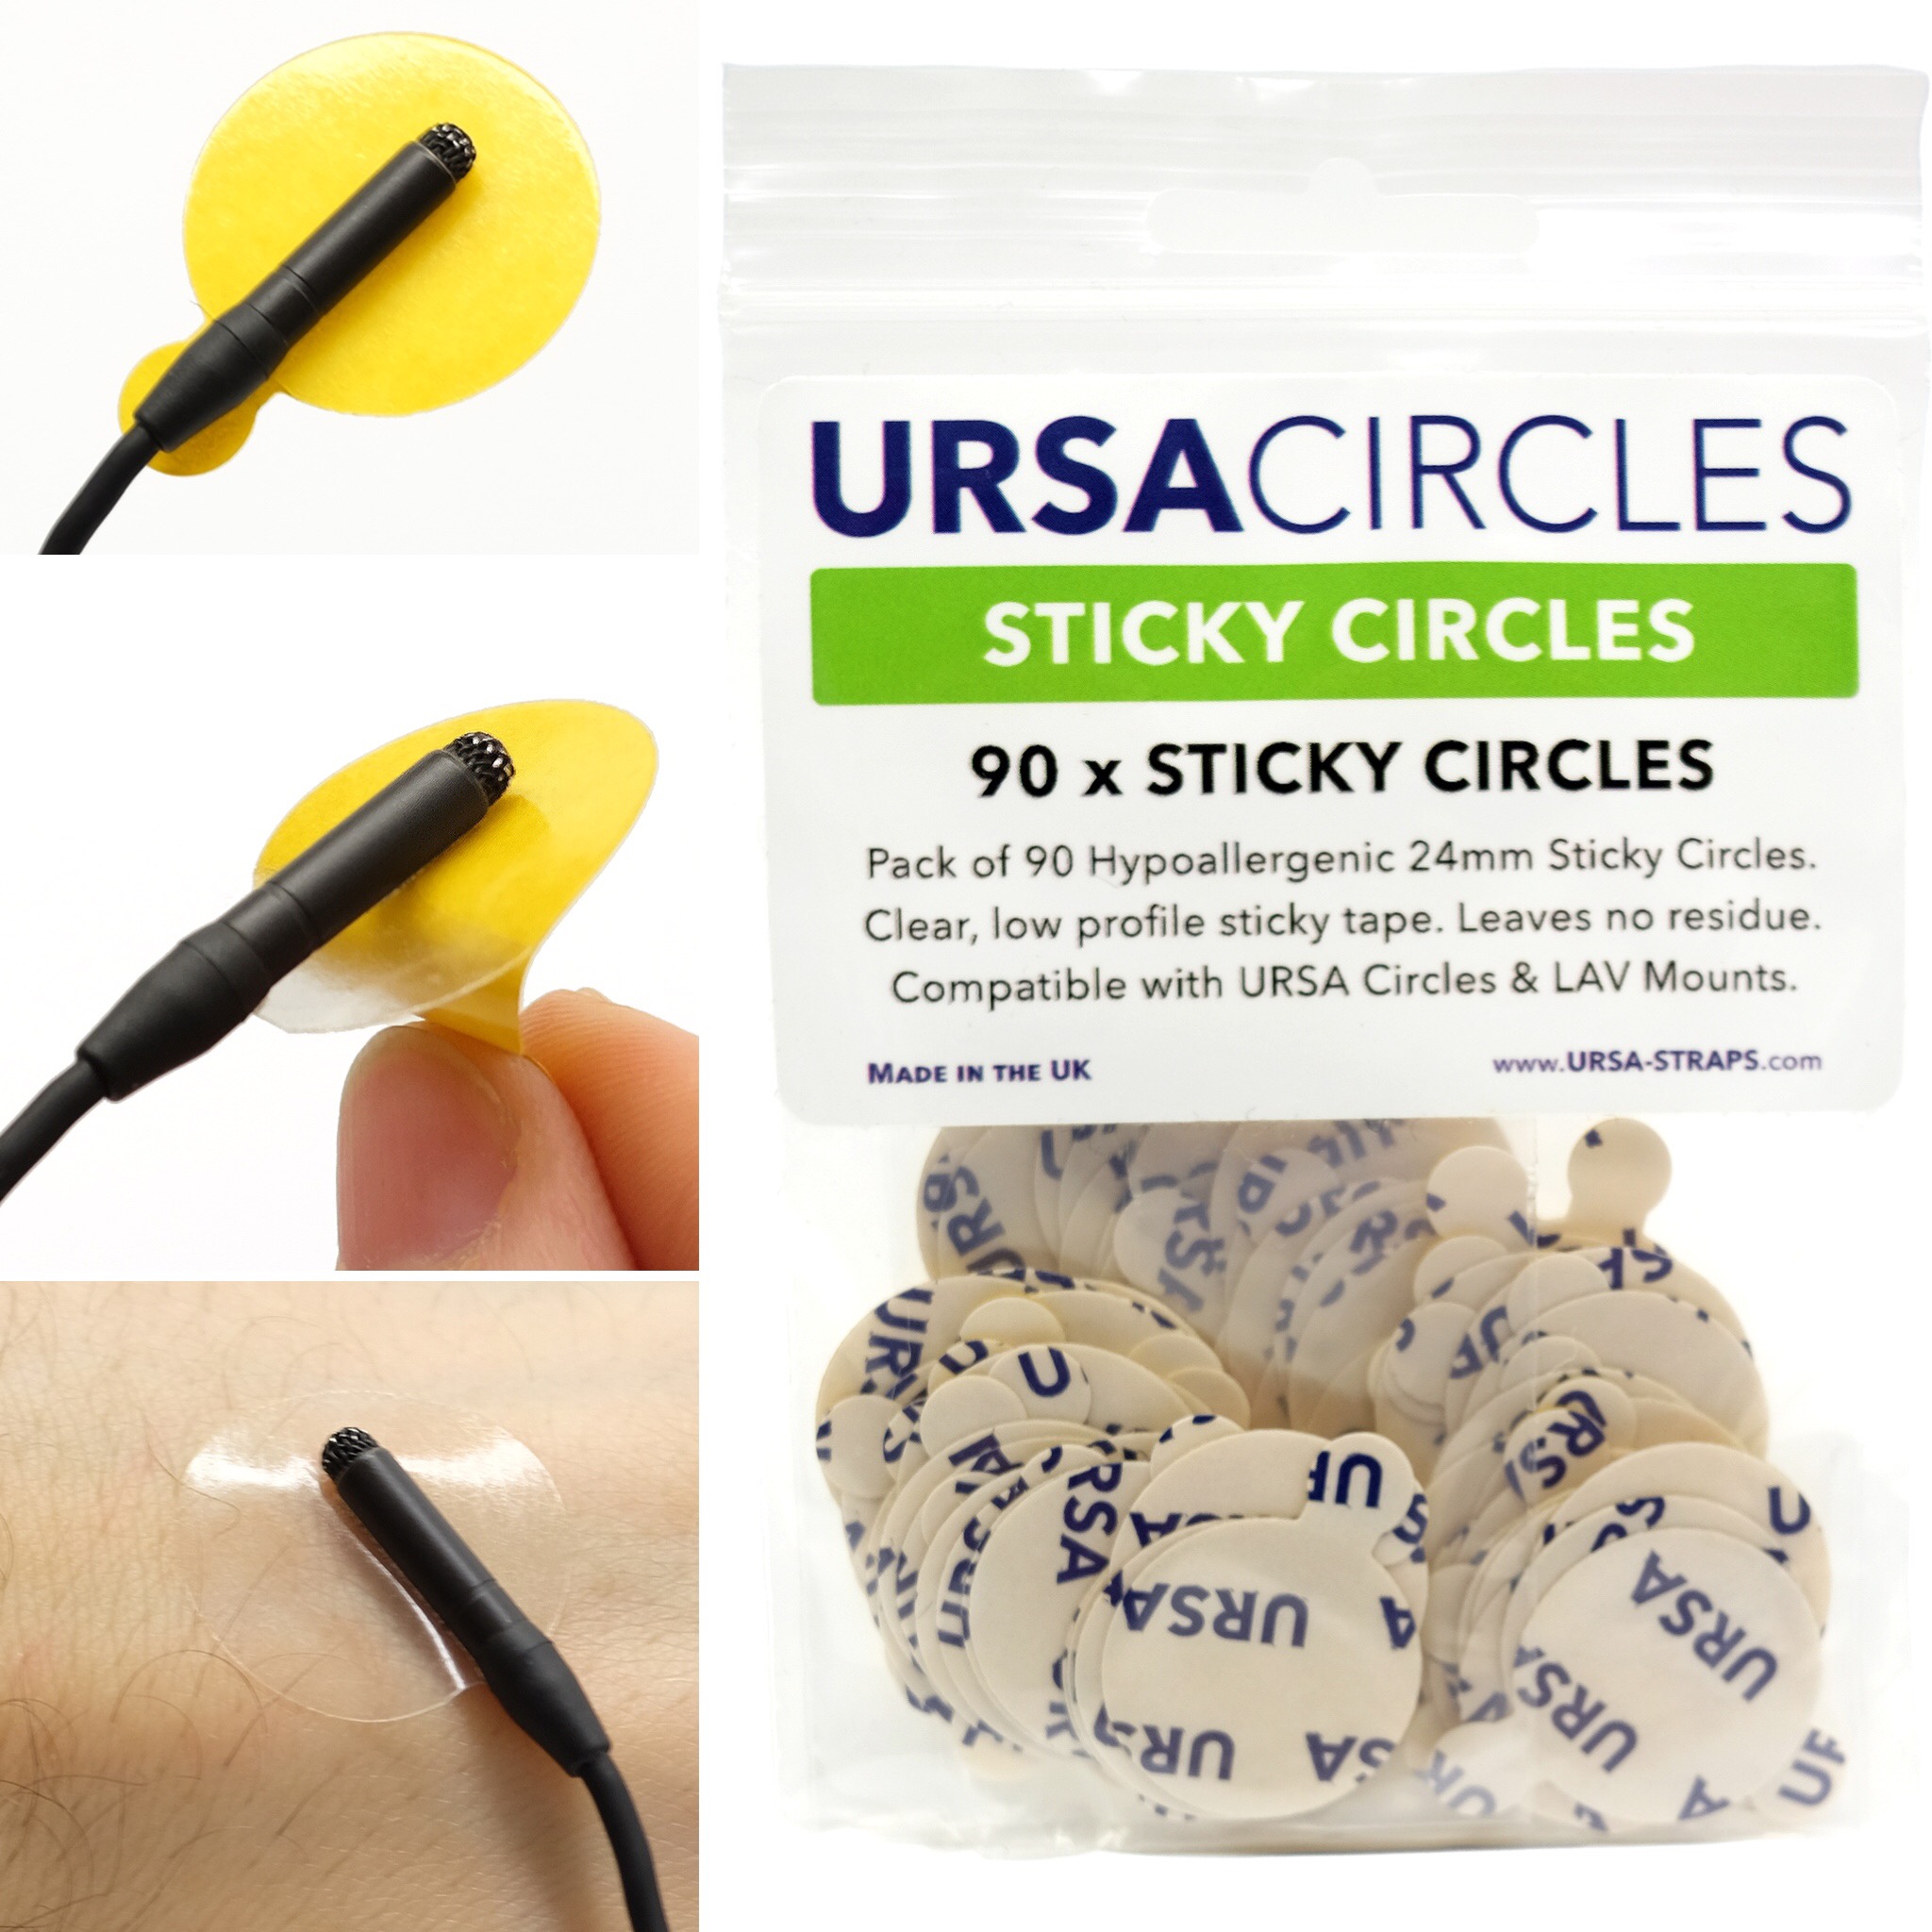 URSA Sticky Circles